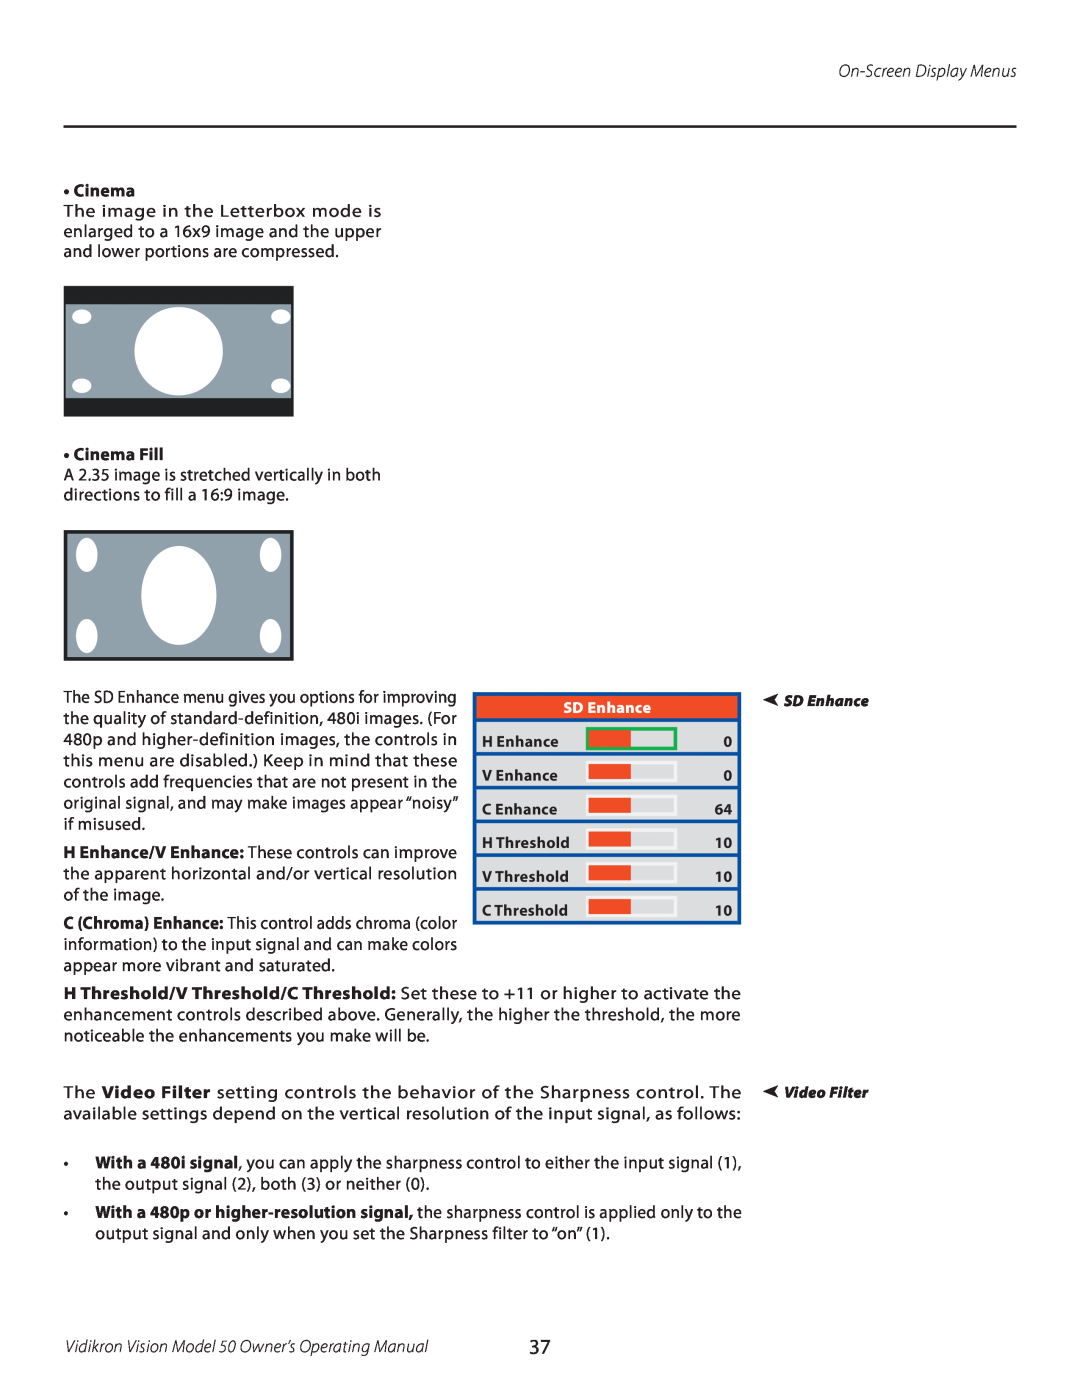 Vidikron manual Cinema Fill, On-Screen Display Menus, Vidikron Vision Model 50 Owner’s Operating Manual 